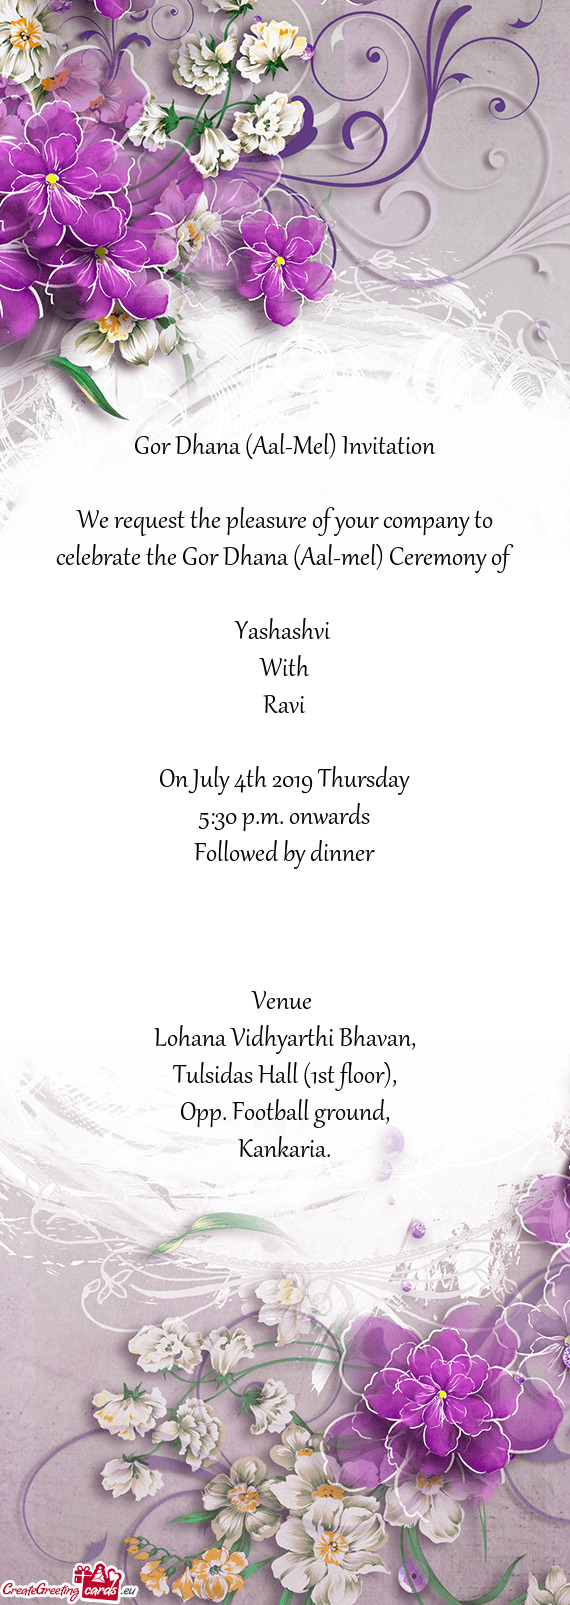 Gor Dhana (Aal-Mel) Invitation